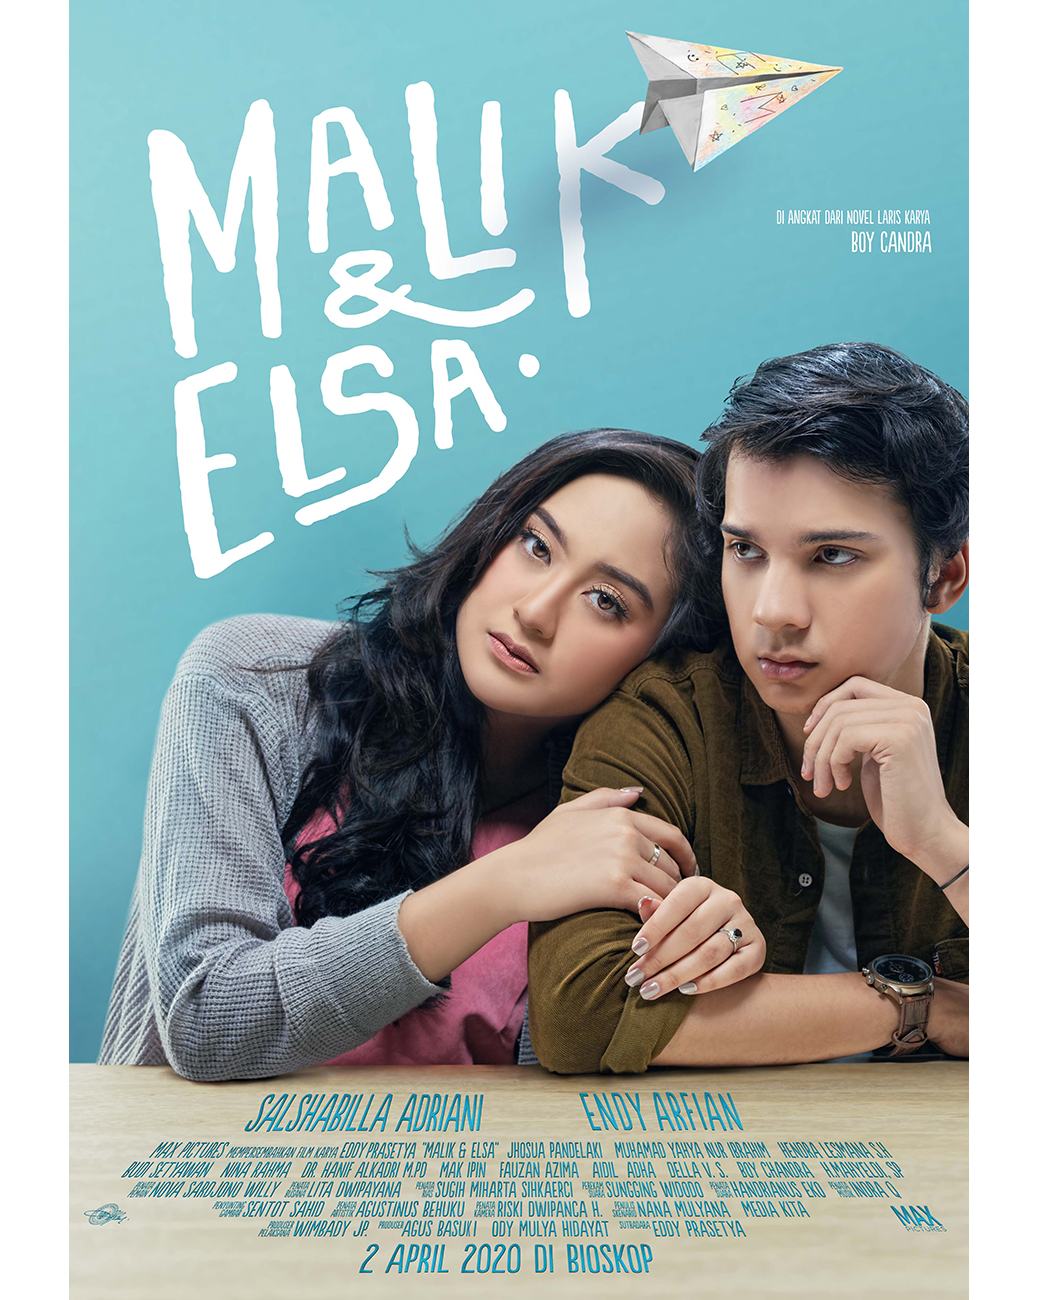 Poster Malik & Elsa